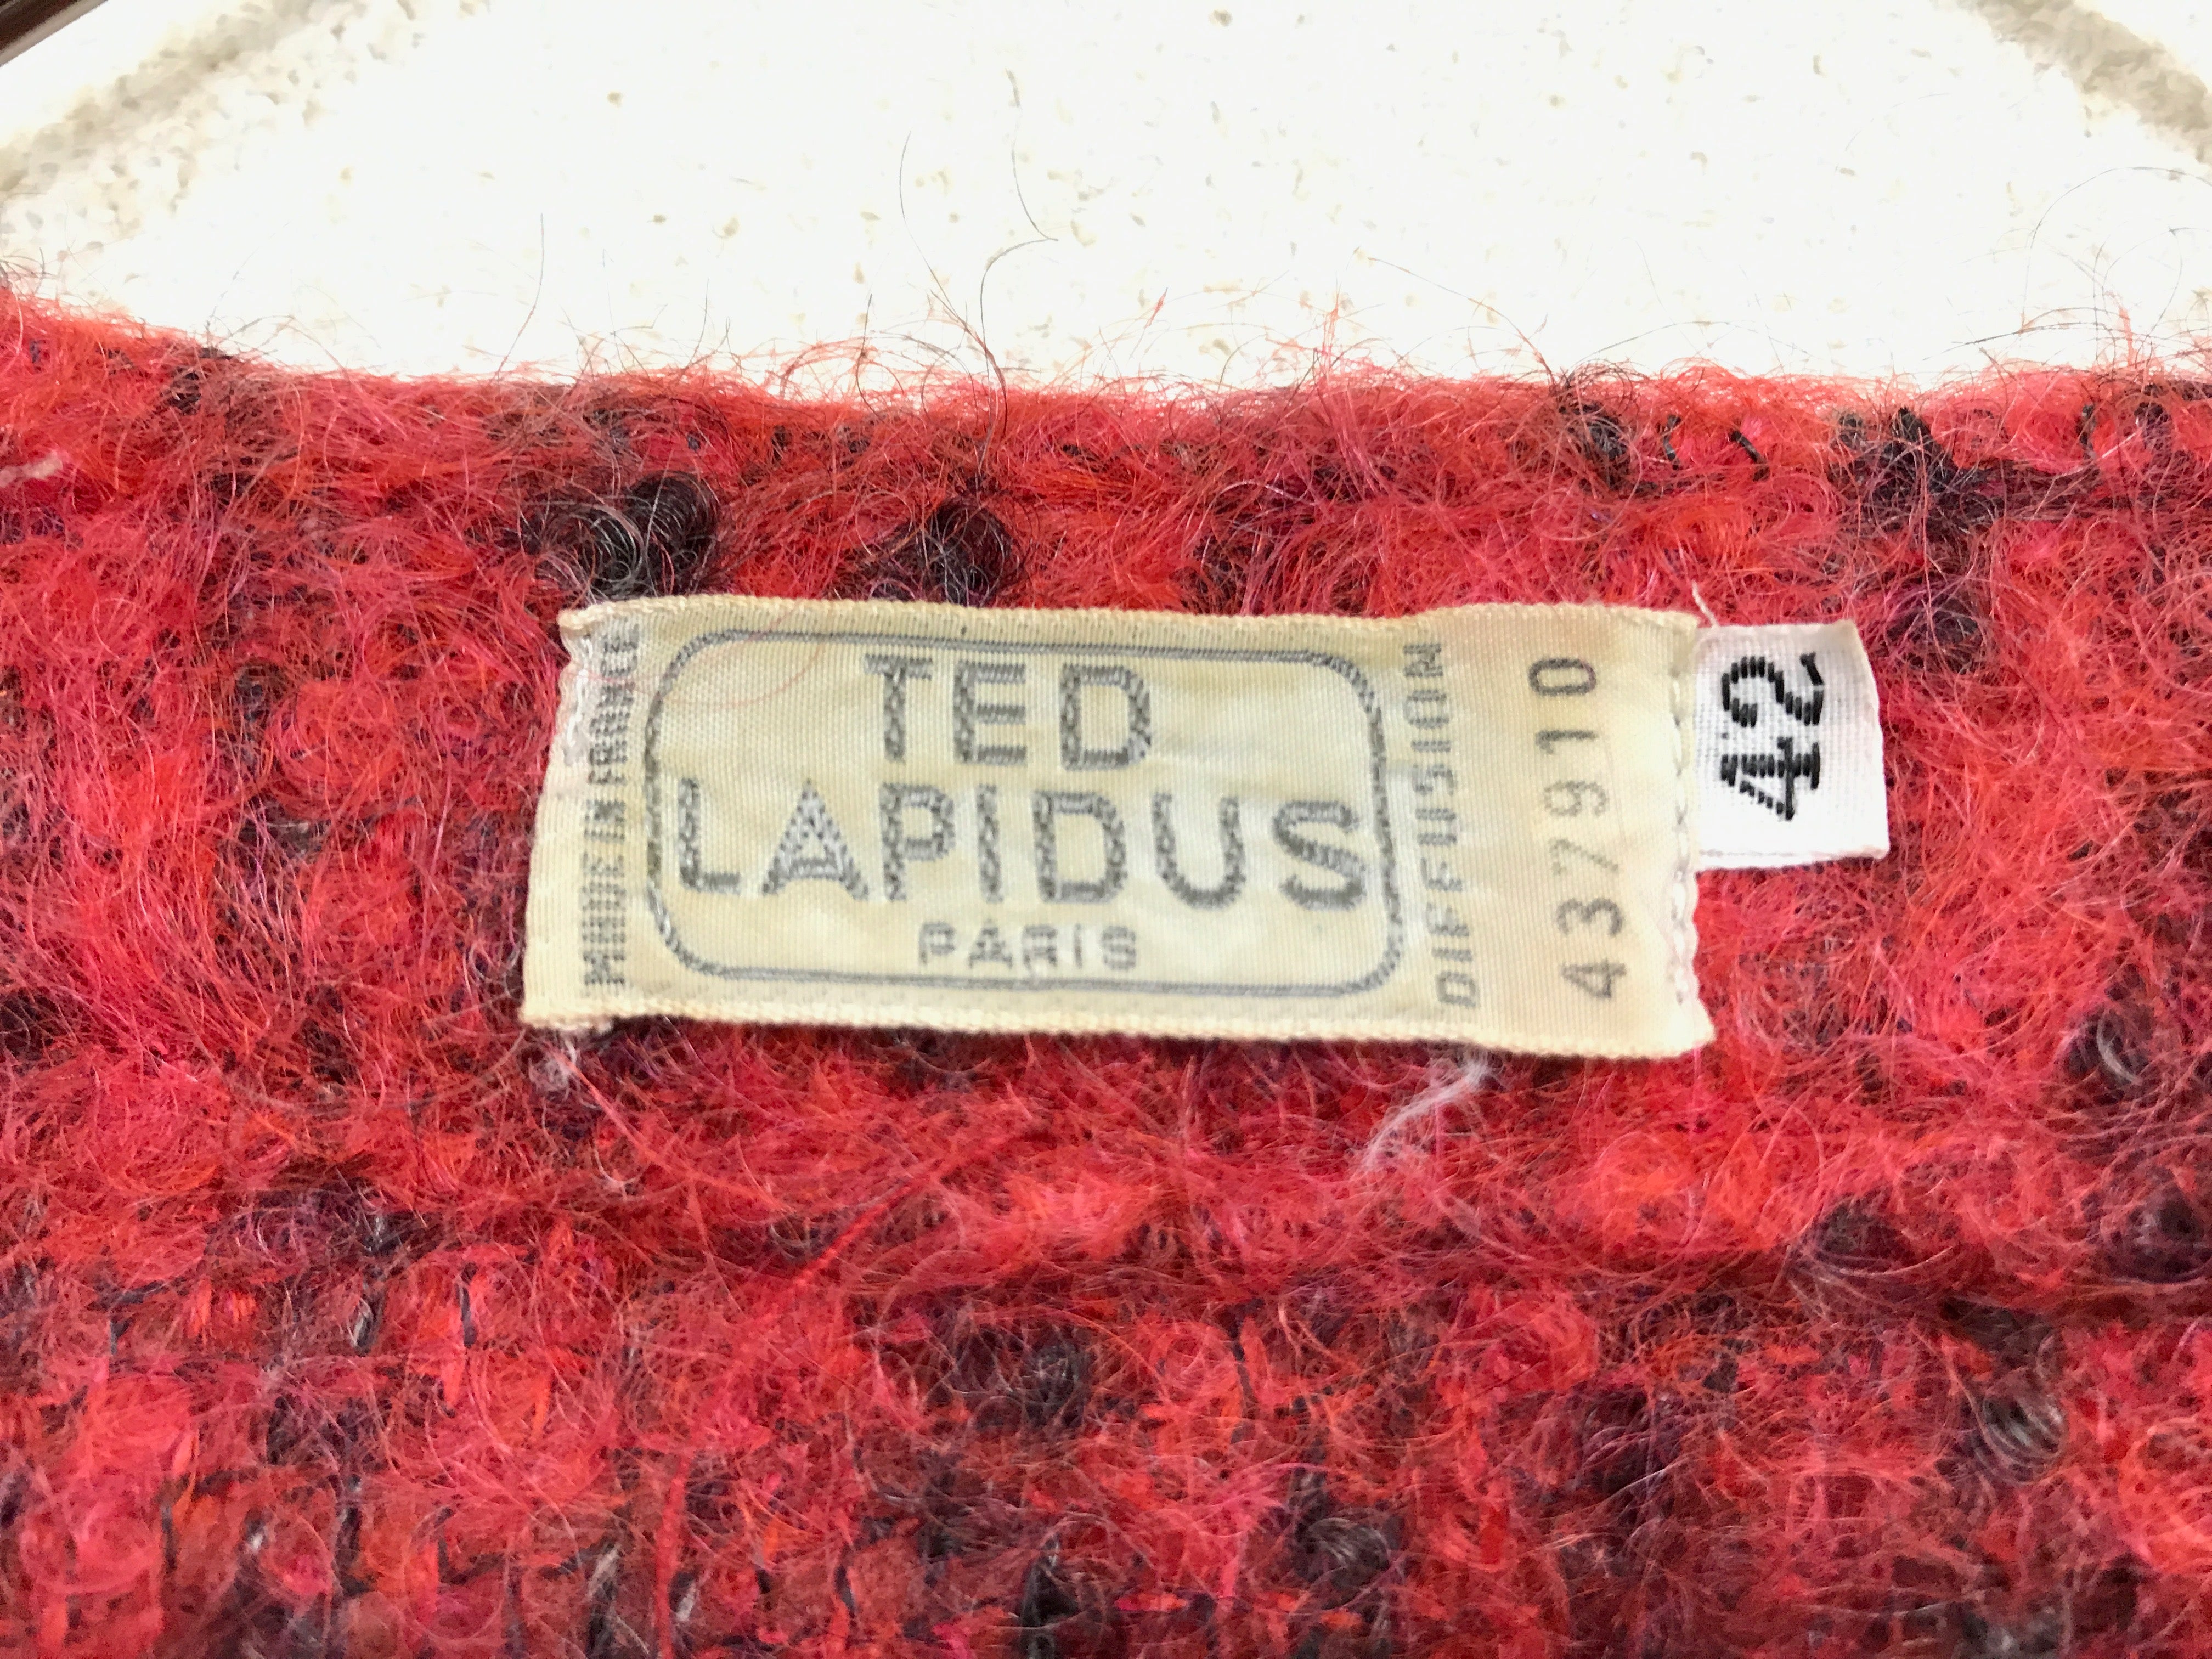 "TED LAPIDUS" wool/mohair sleeveless coat (vest)